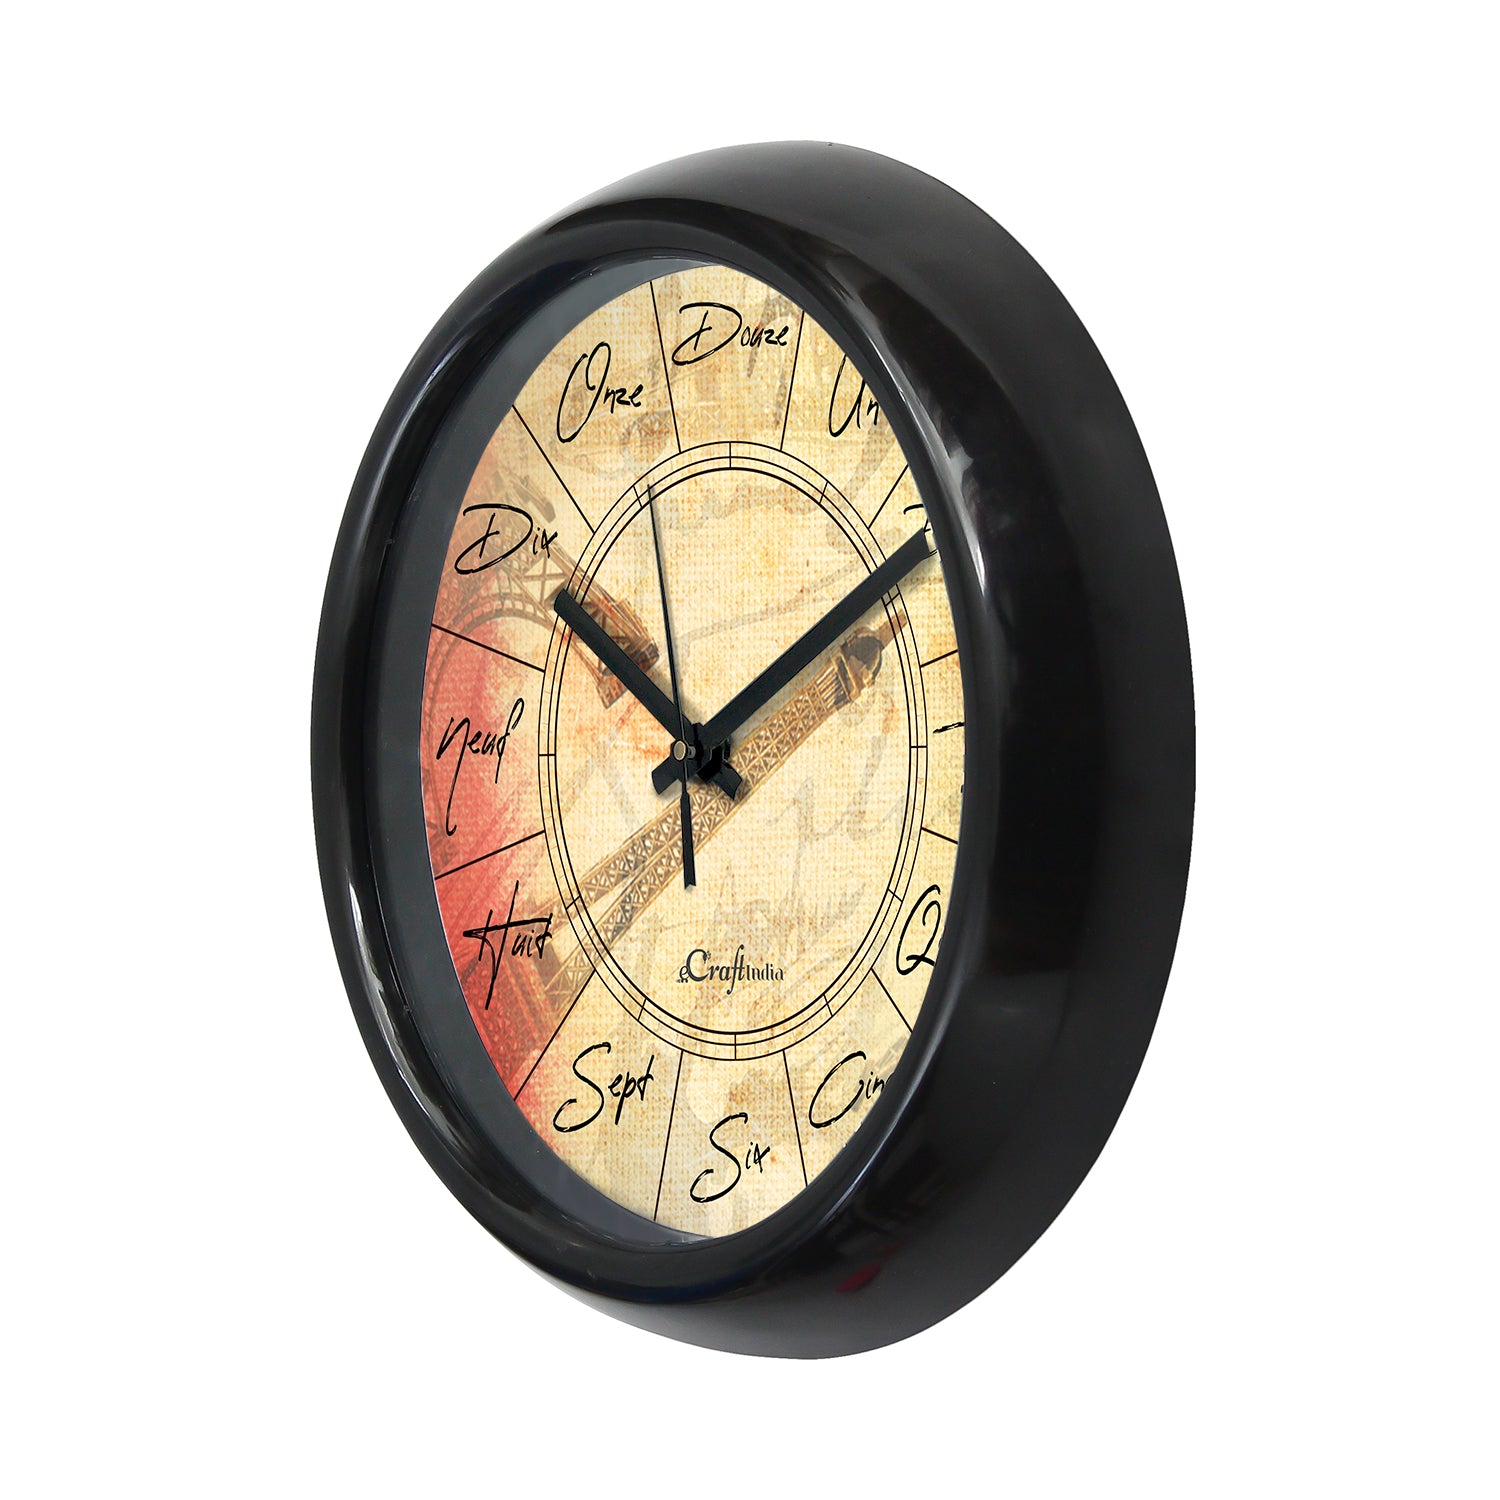 "French Number" Designer Round Analog Black Wall Clock 4